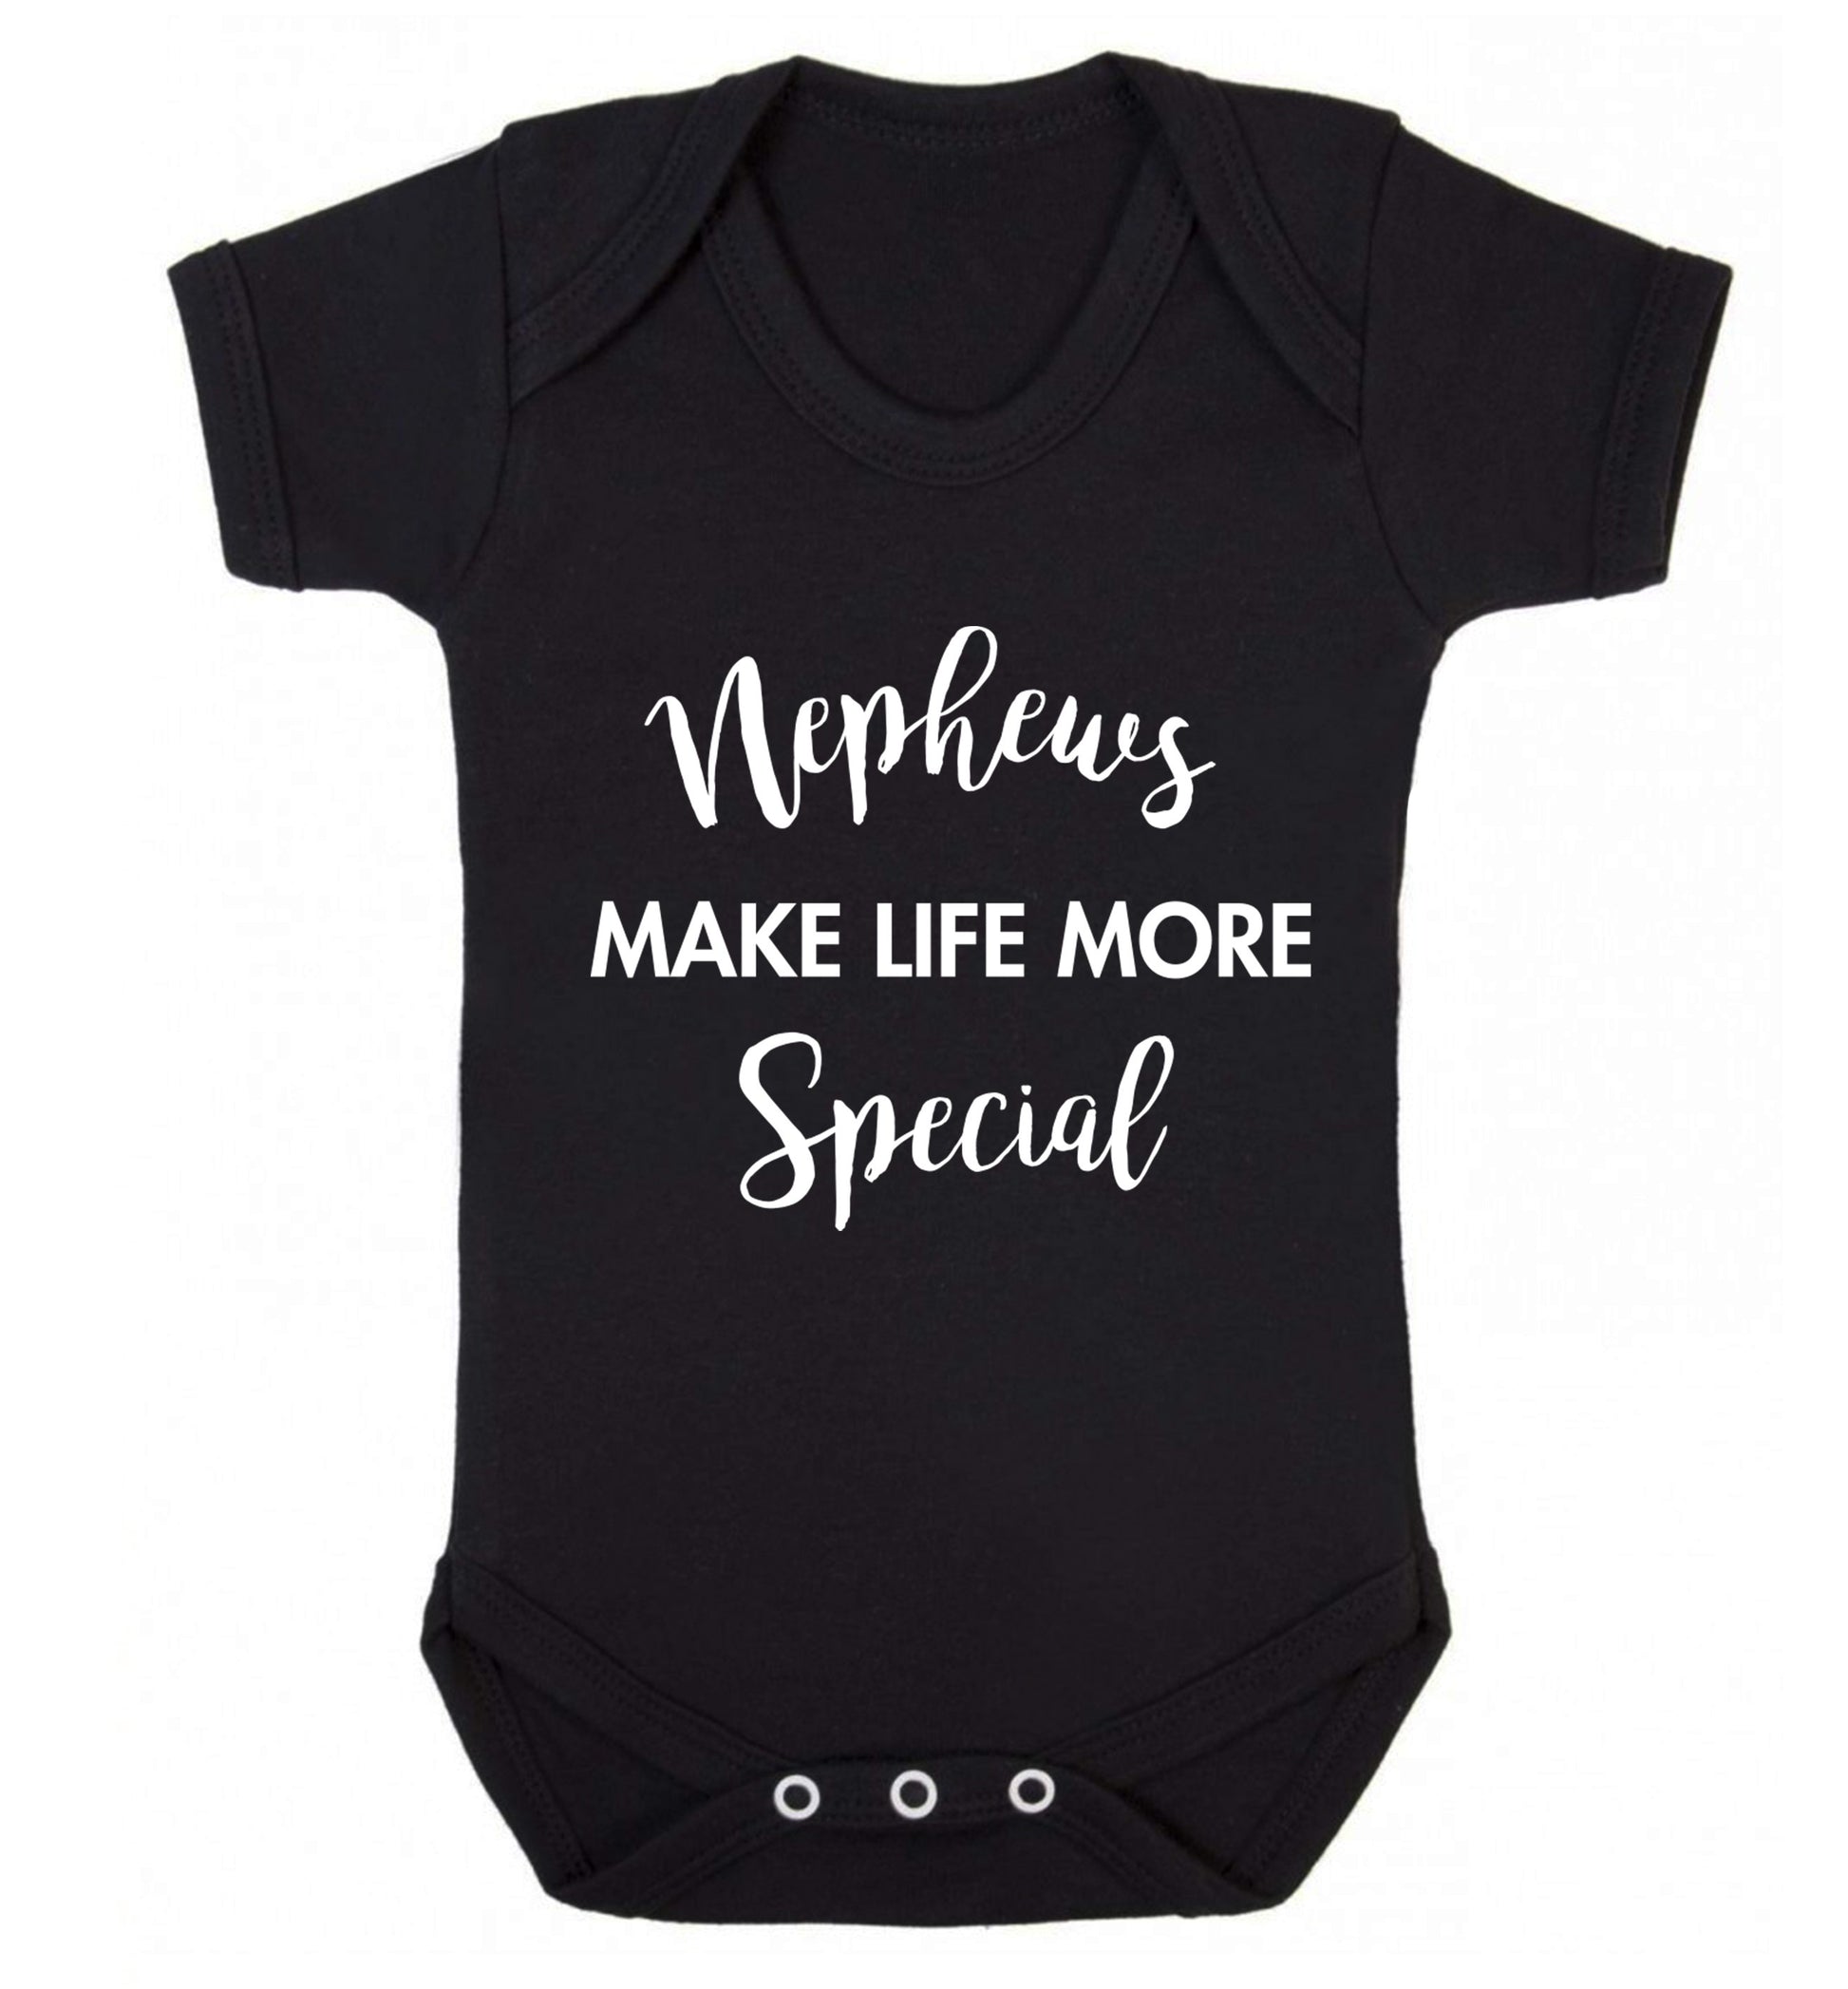 Nephews make life more special Baby Vest black 18-24 months